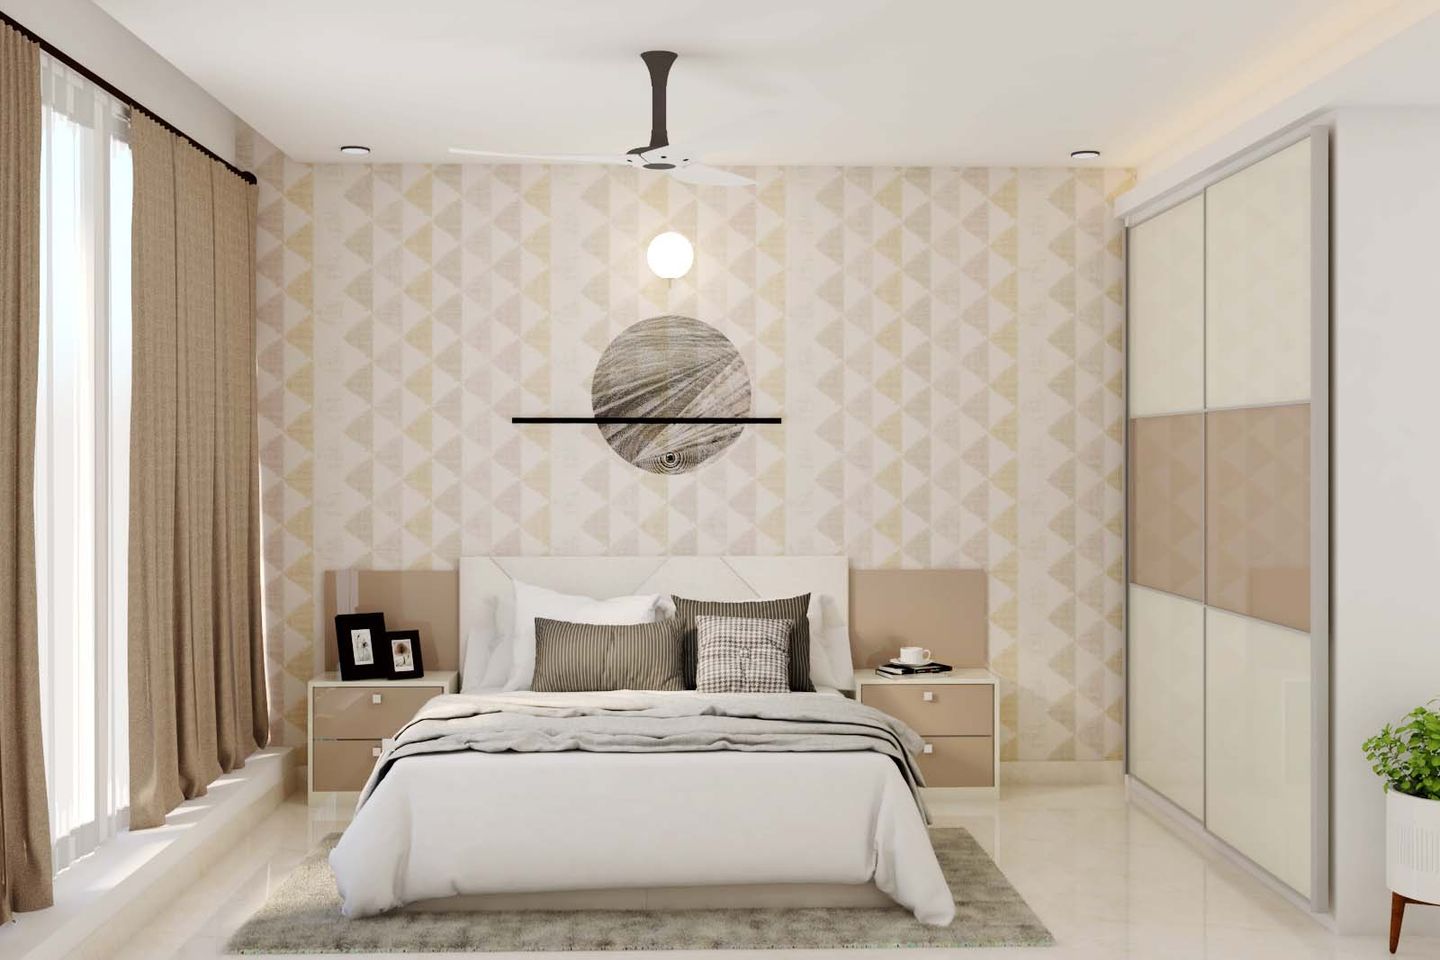 Spacious Guest Bedroom Design With Beige Colour Theme - Livspace